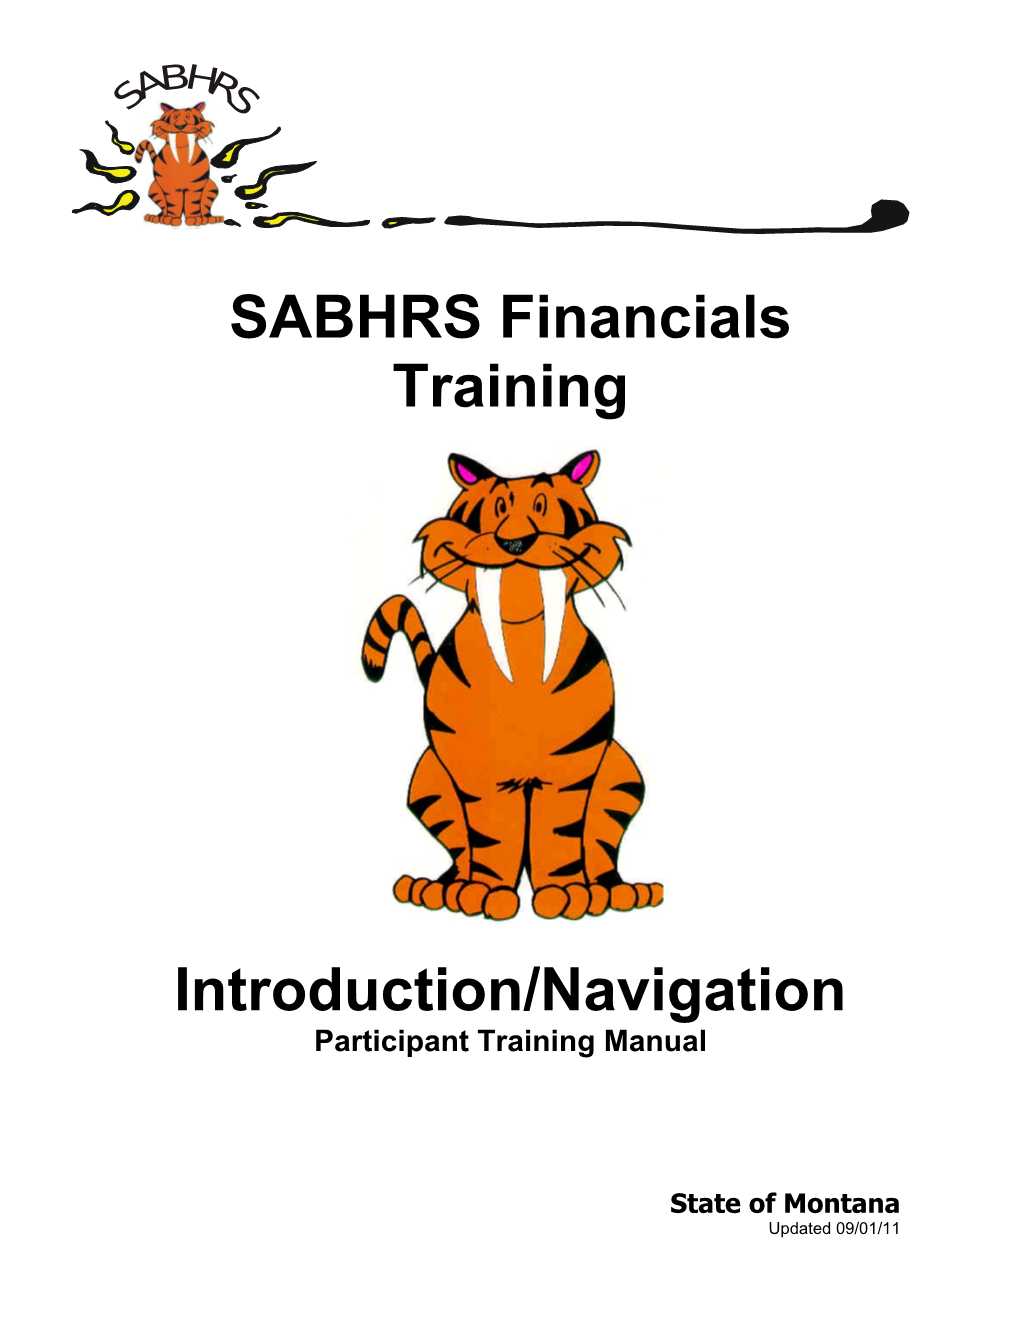 Introduction/Navigation Participant Training Manual